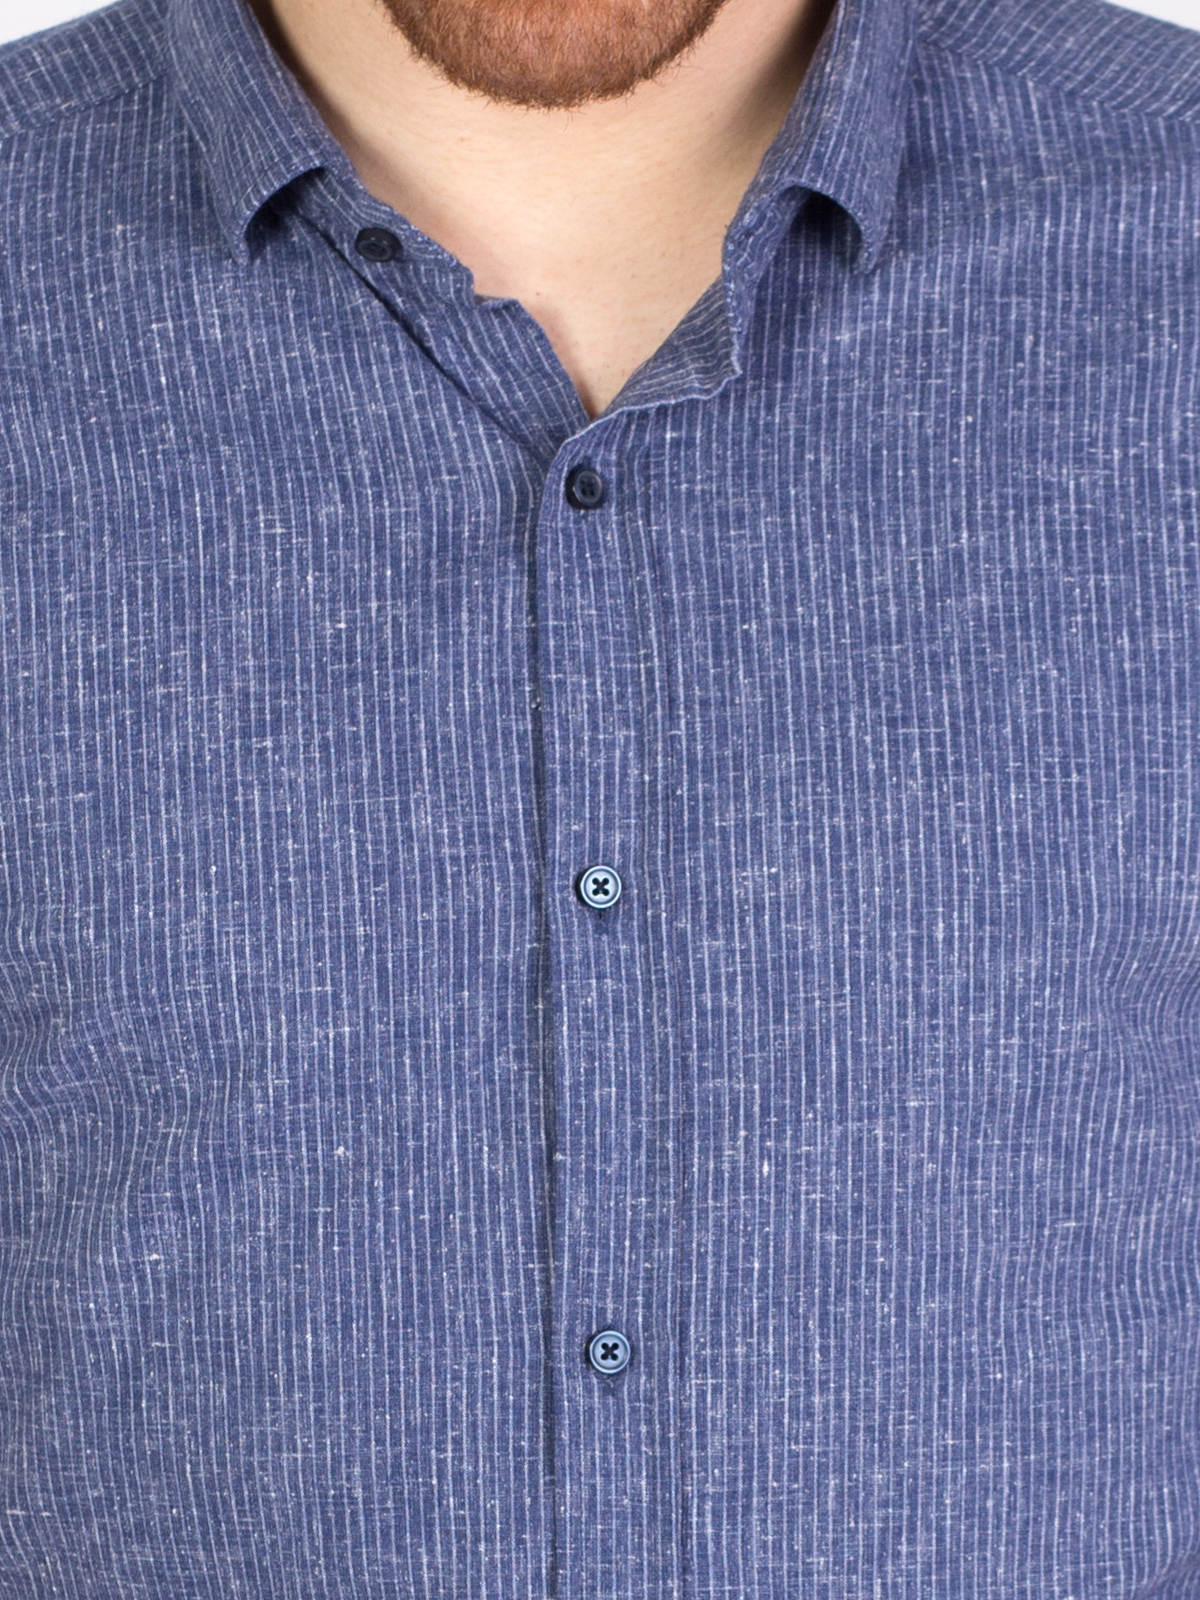 Shirt in dark blue with fine stripes - 21496 € 24.75 img3